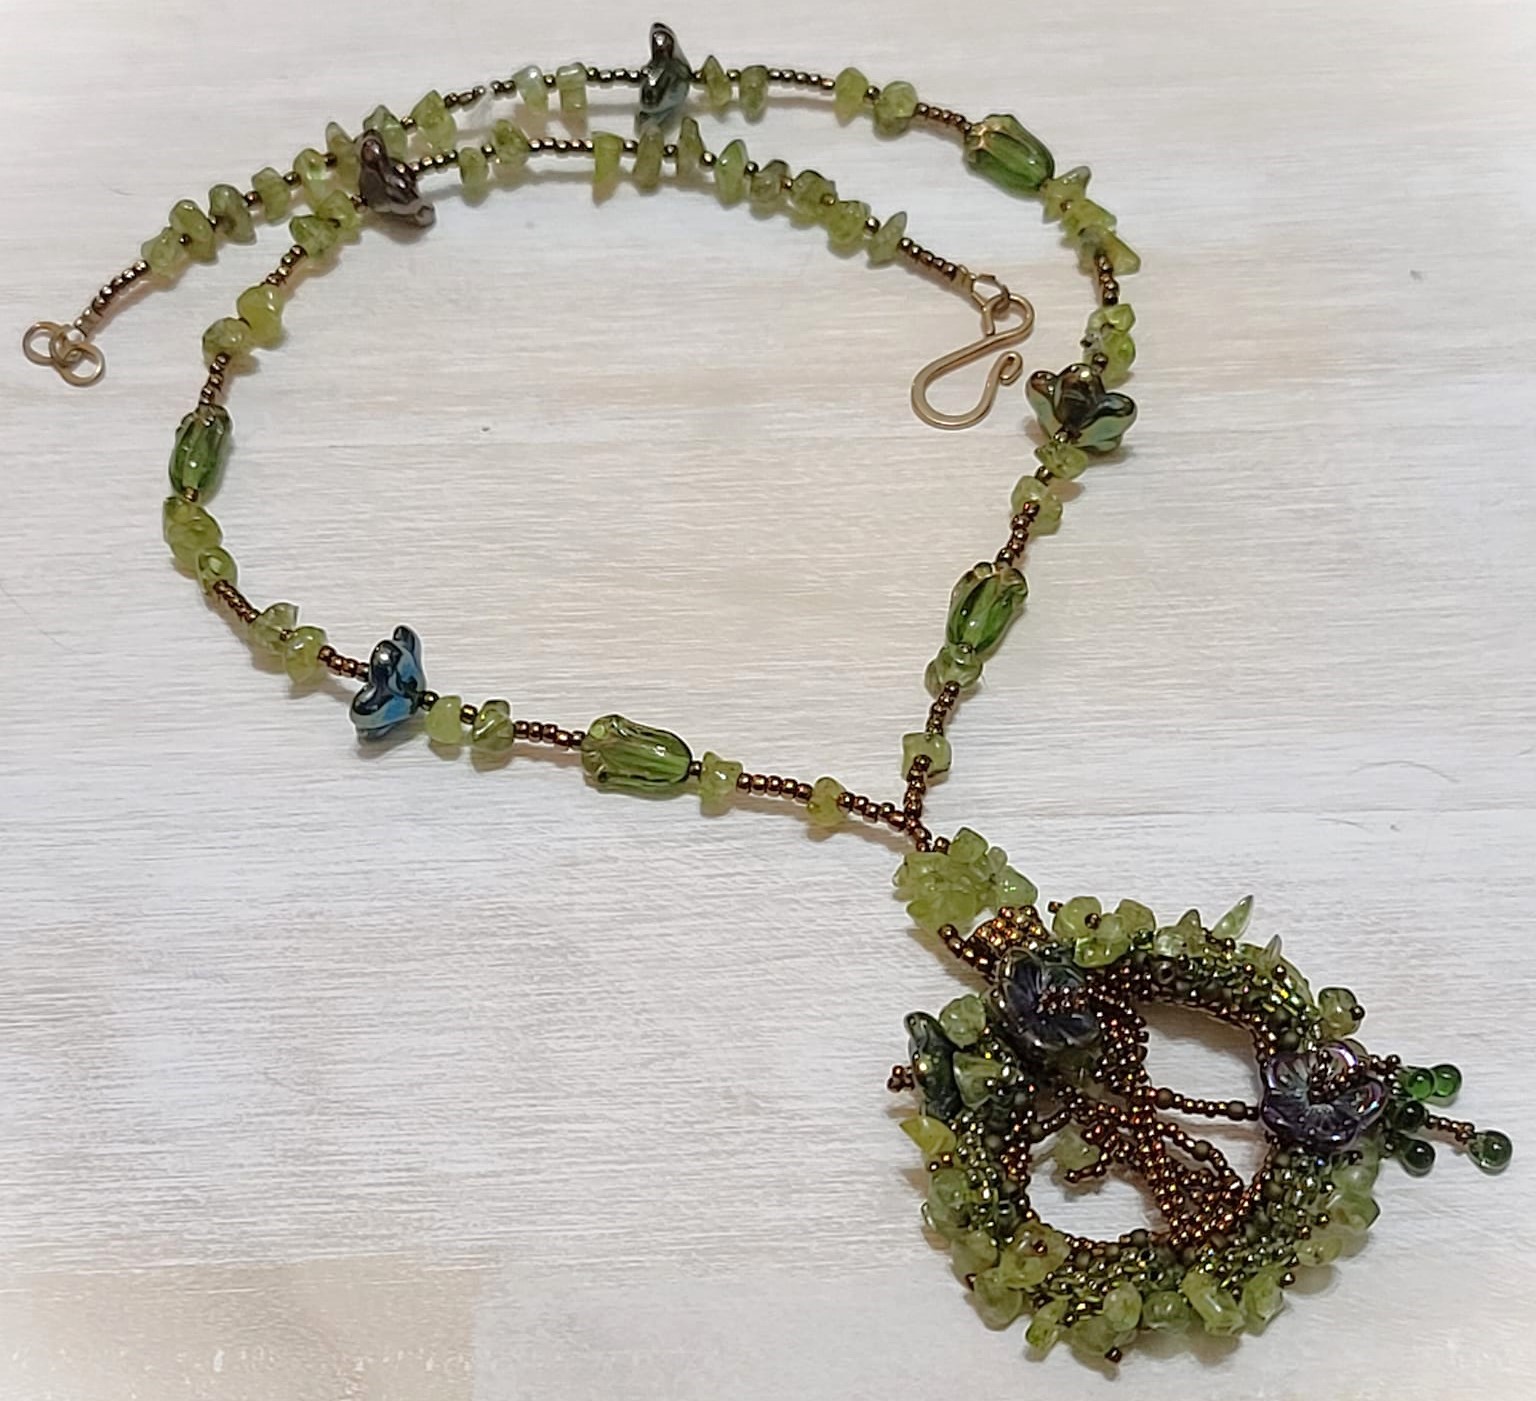 Tree of life pendant necklace, peridot gemstones, miyuki glass